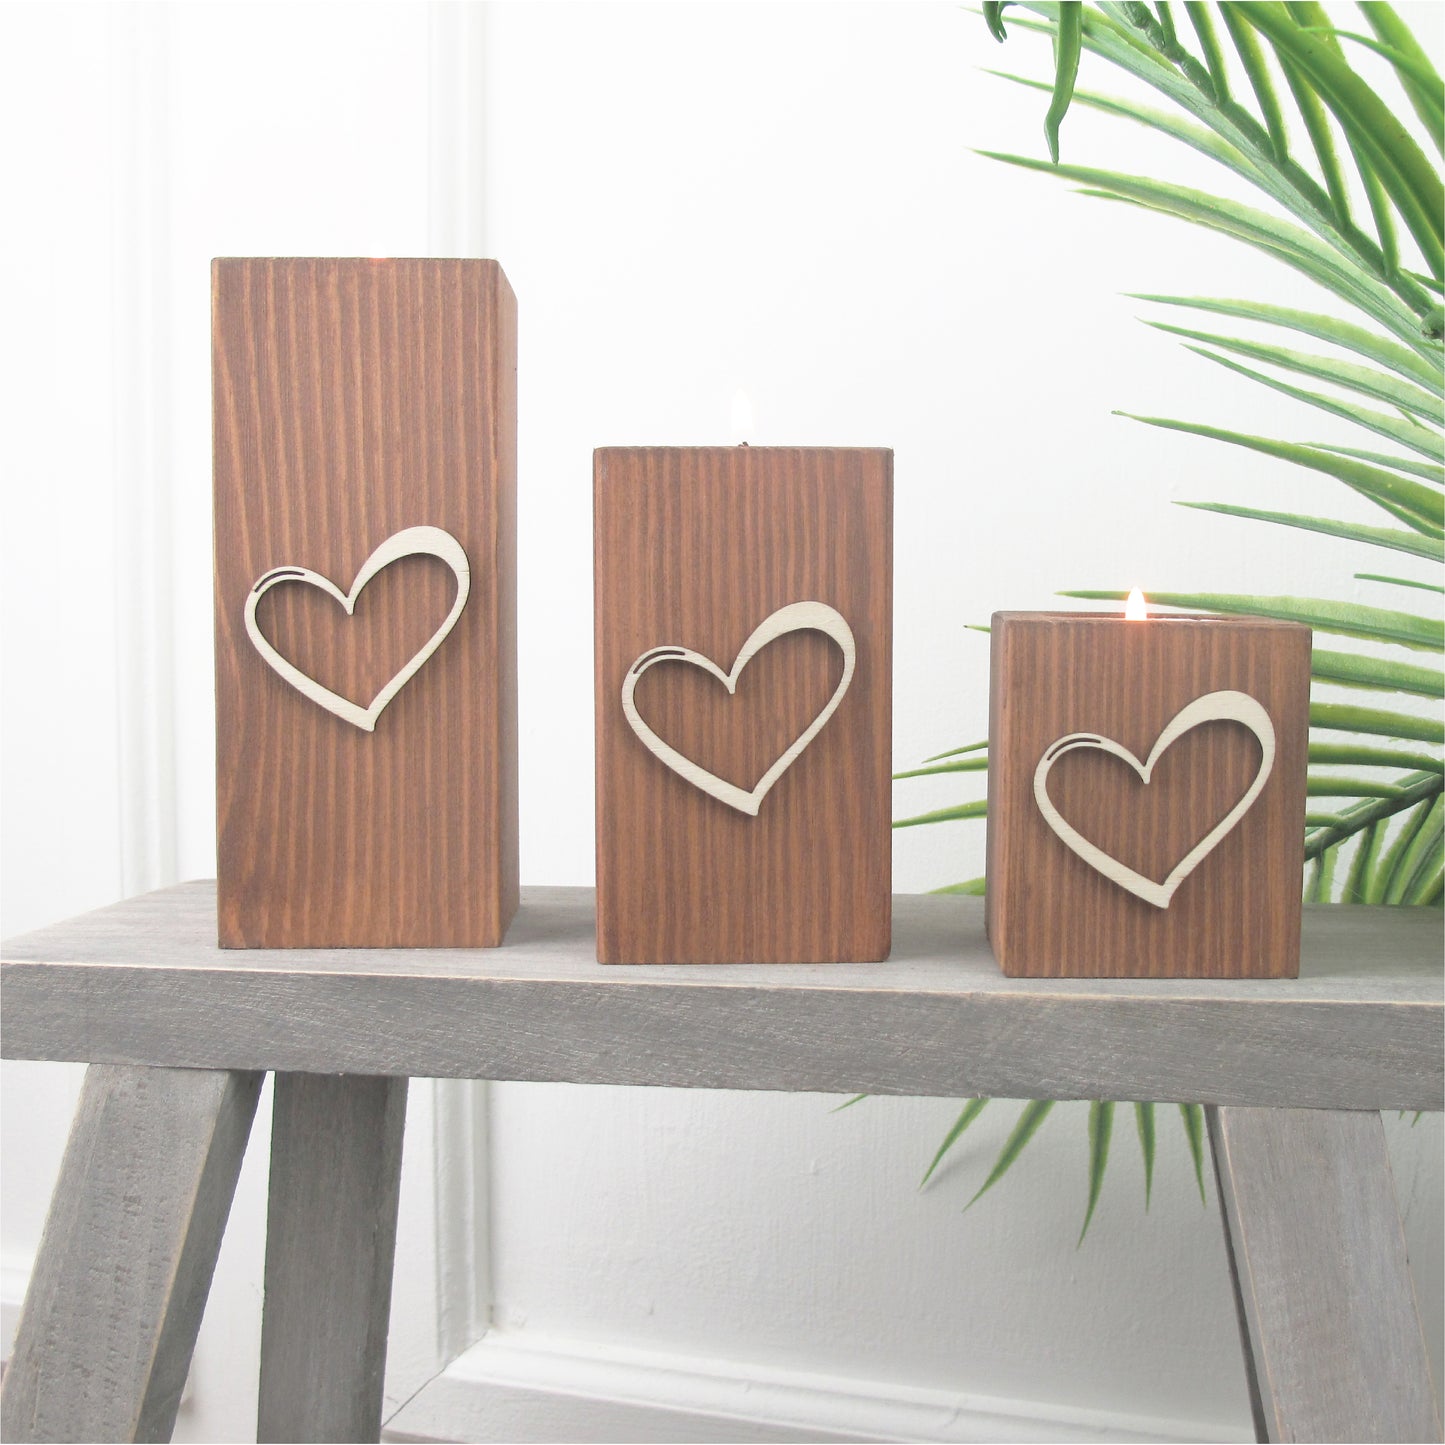 Handcrafted Wooden Tea Light Holders - Raised Love Heart Design